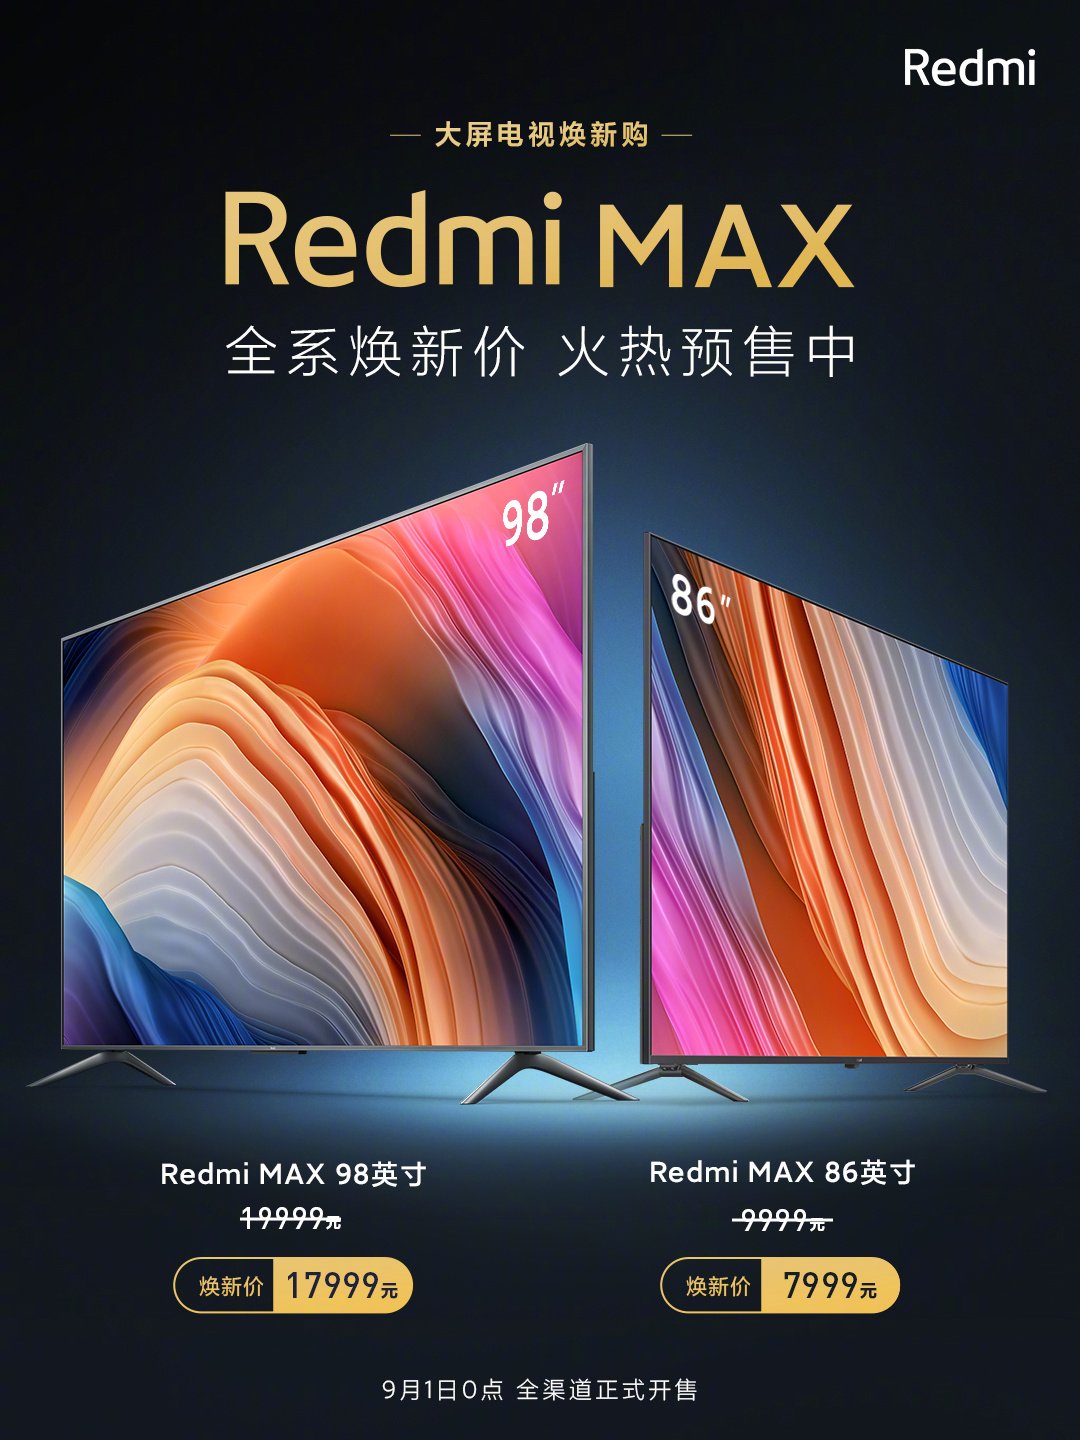 Redmi MAX TV 86 and 98 price cut